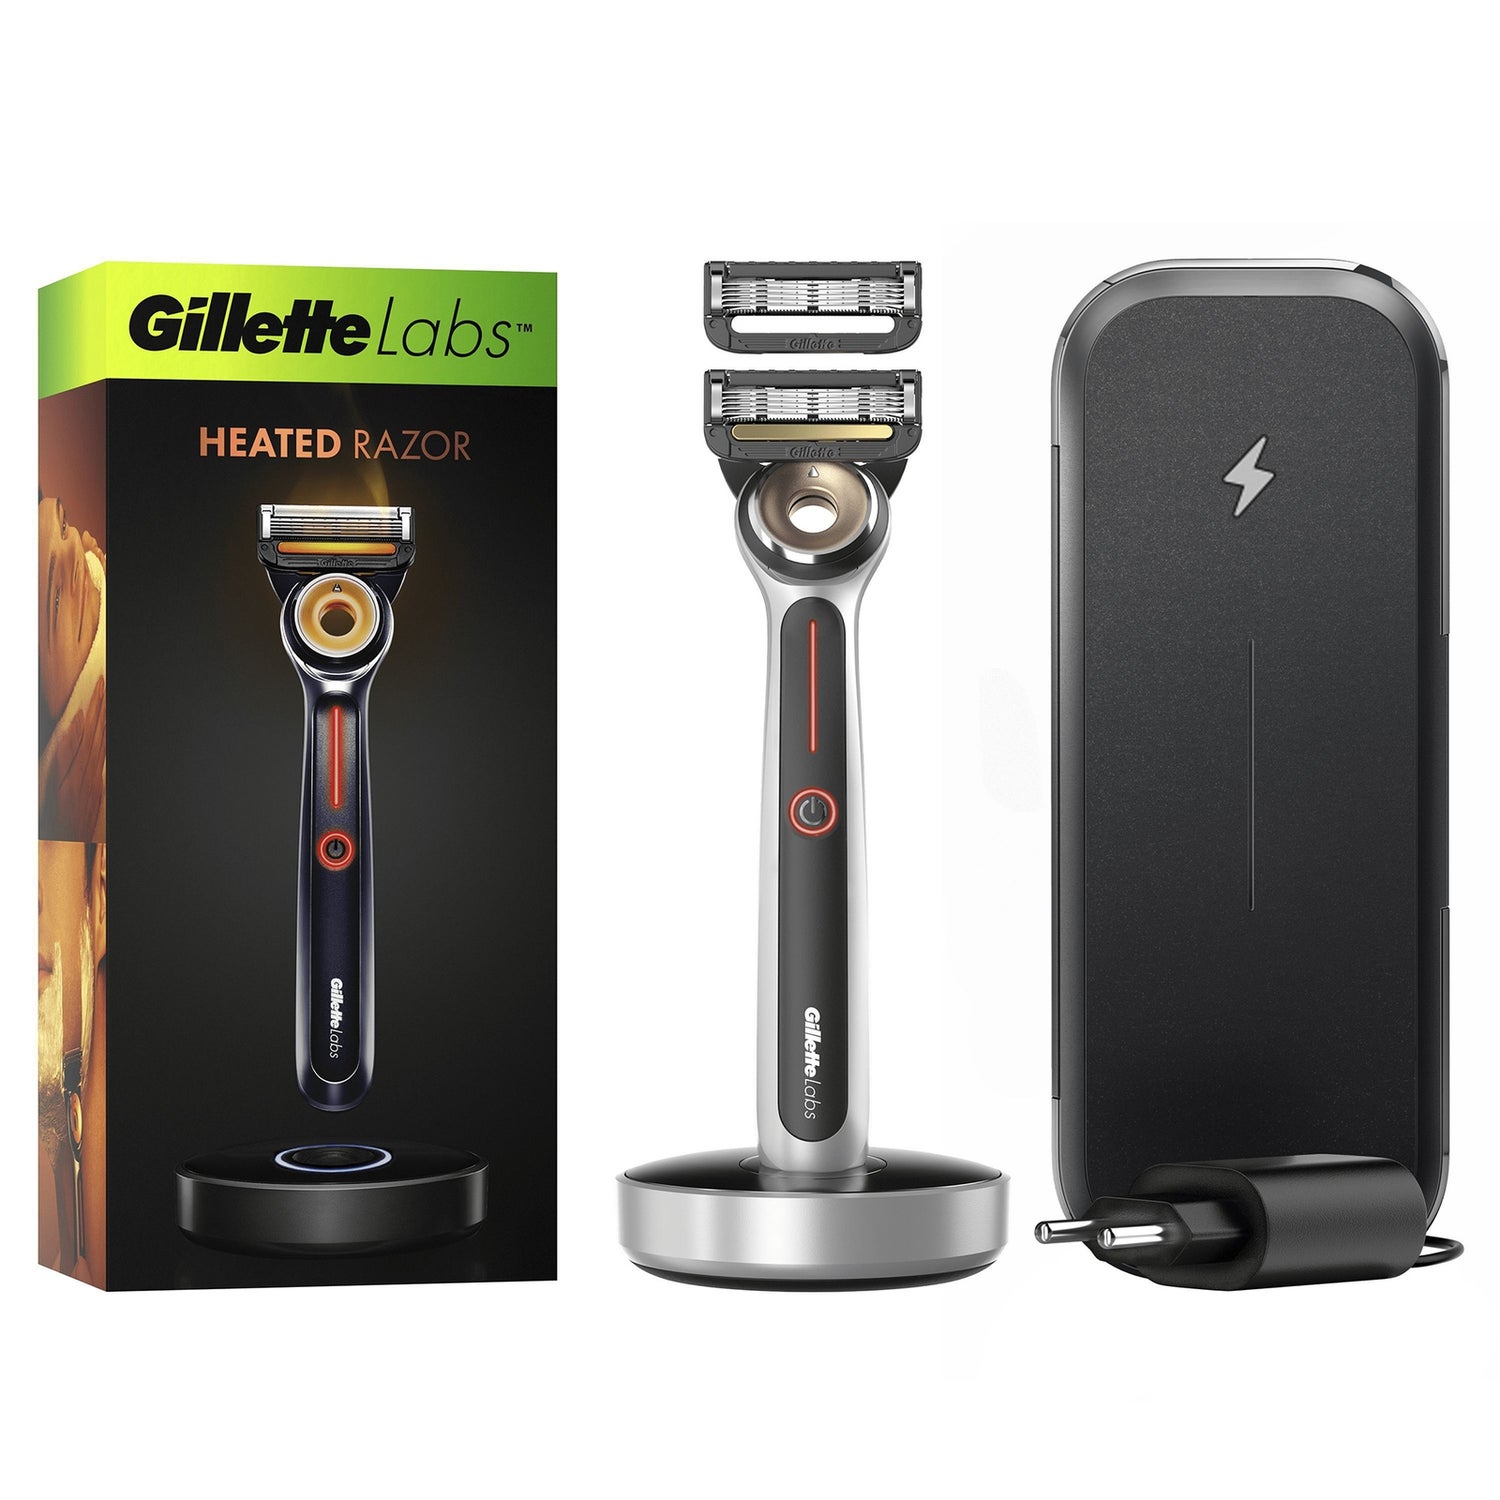 Gillette Labs Heated Razor Travel Kit